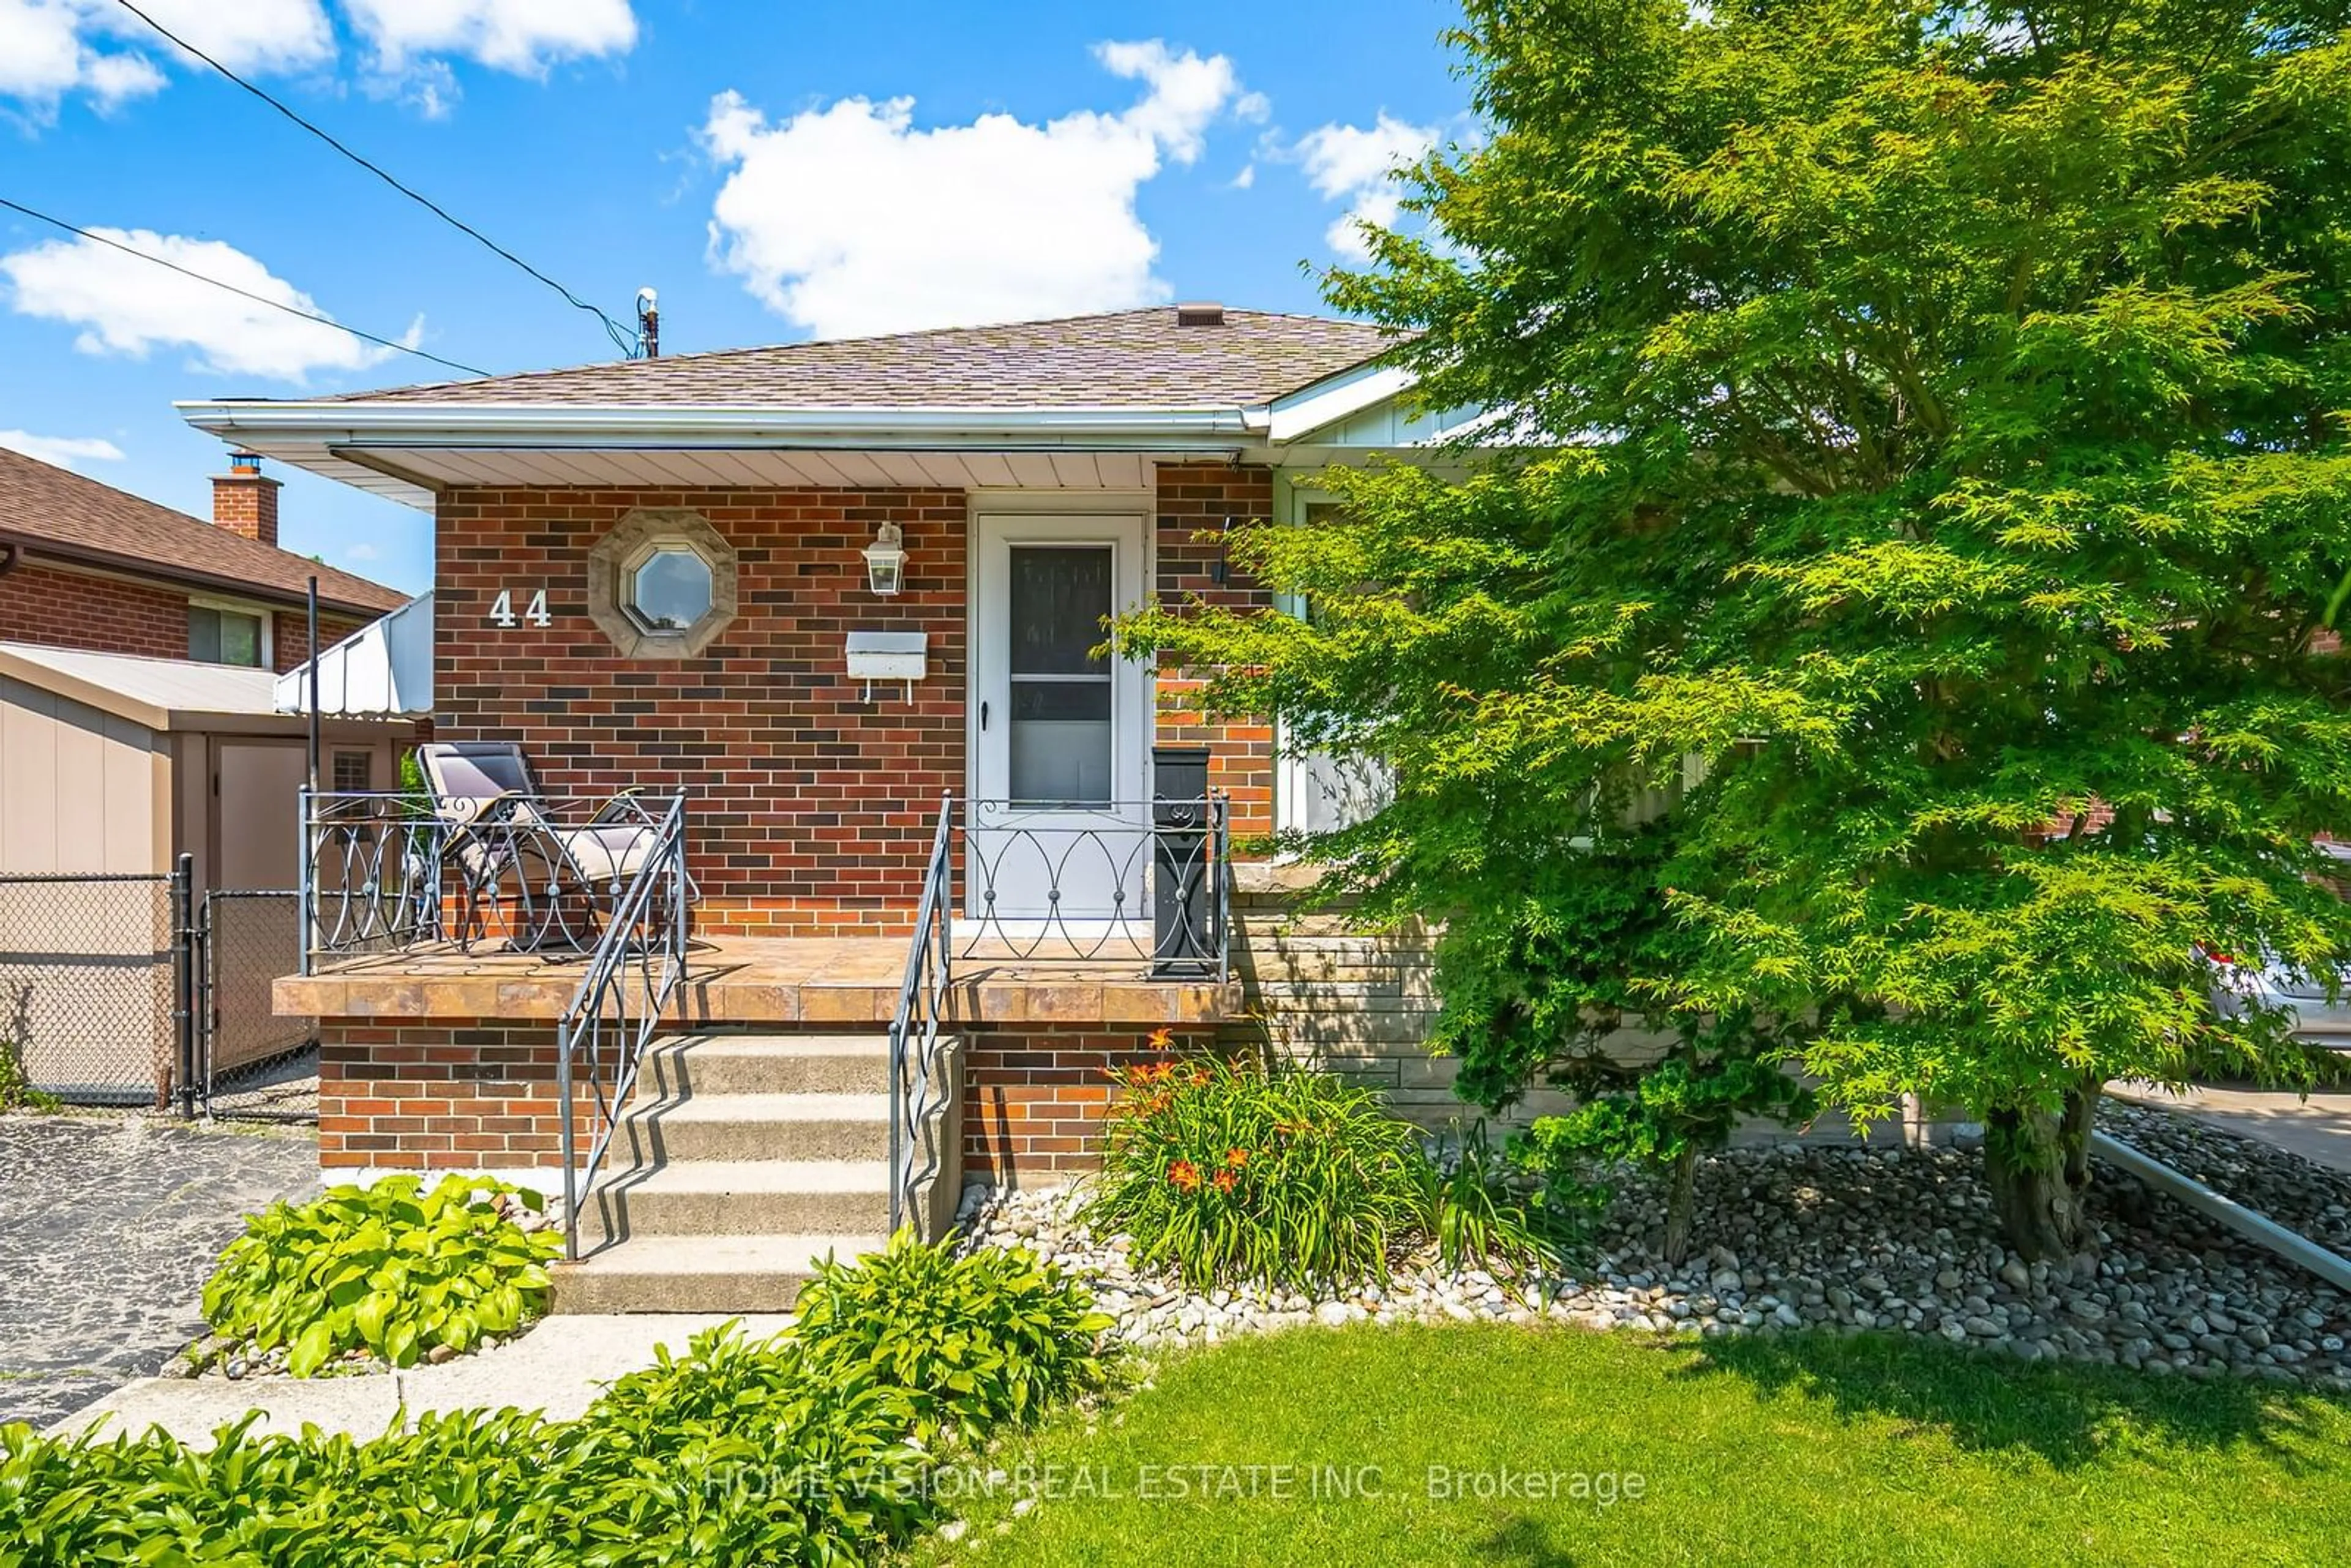 Home with brick exterior material for 44 Clarendon Ave, Hamilton Ontario L9A 3A1